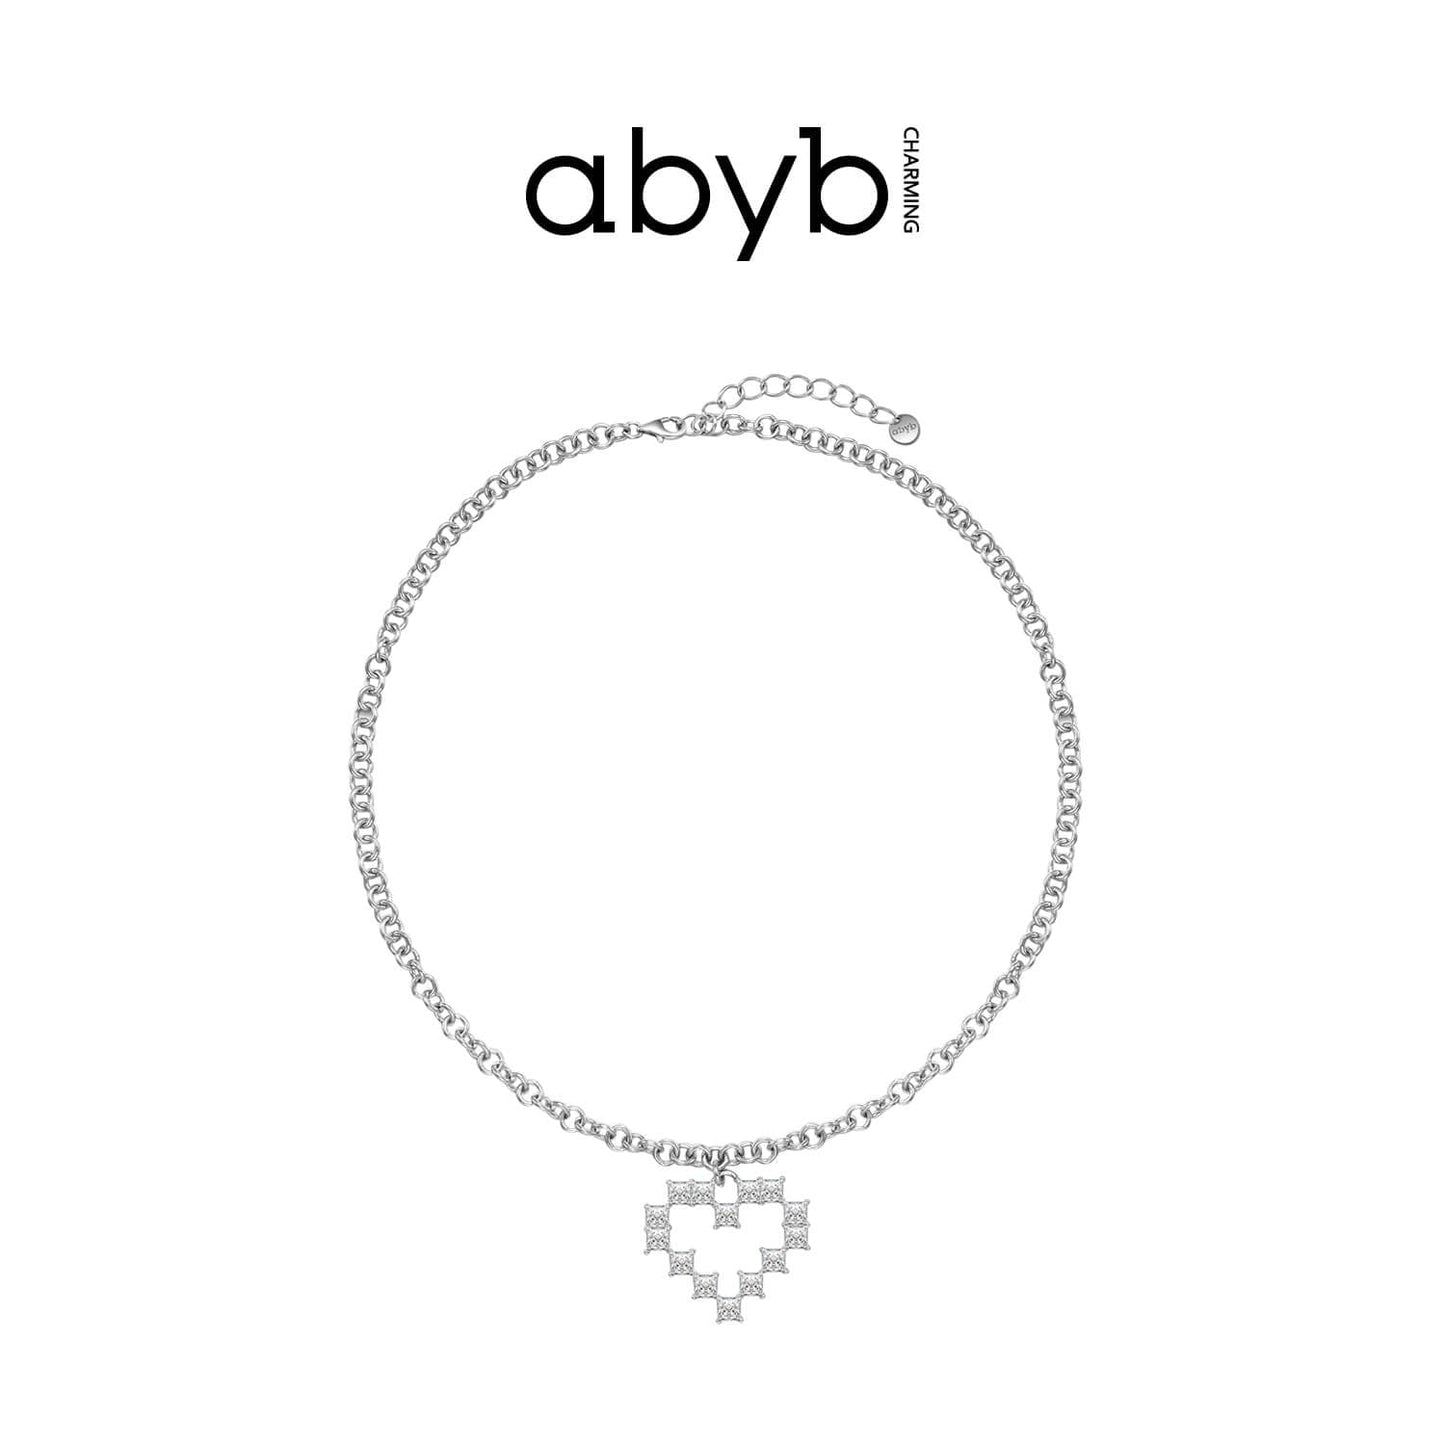 Abyb Charming Longing Necklace - Fixxshop